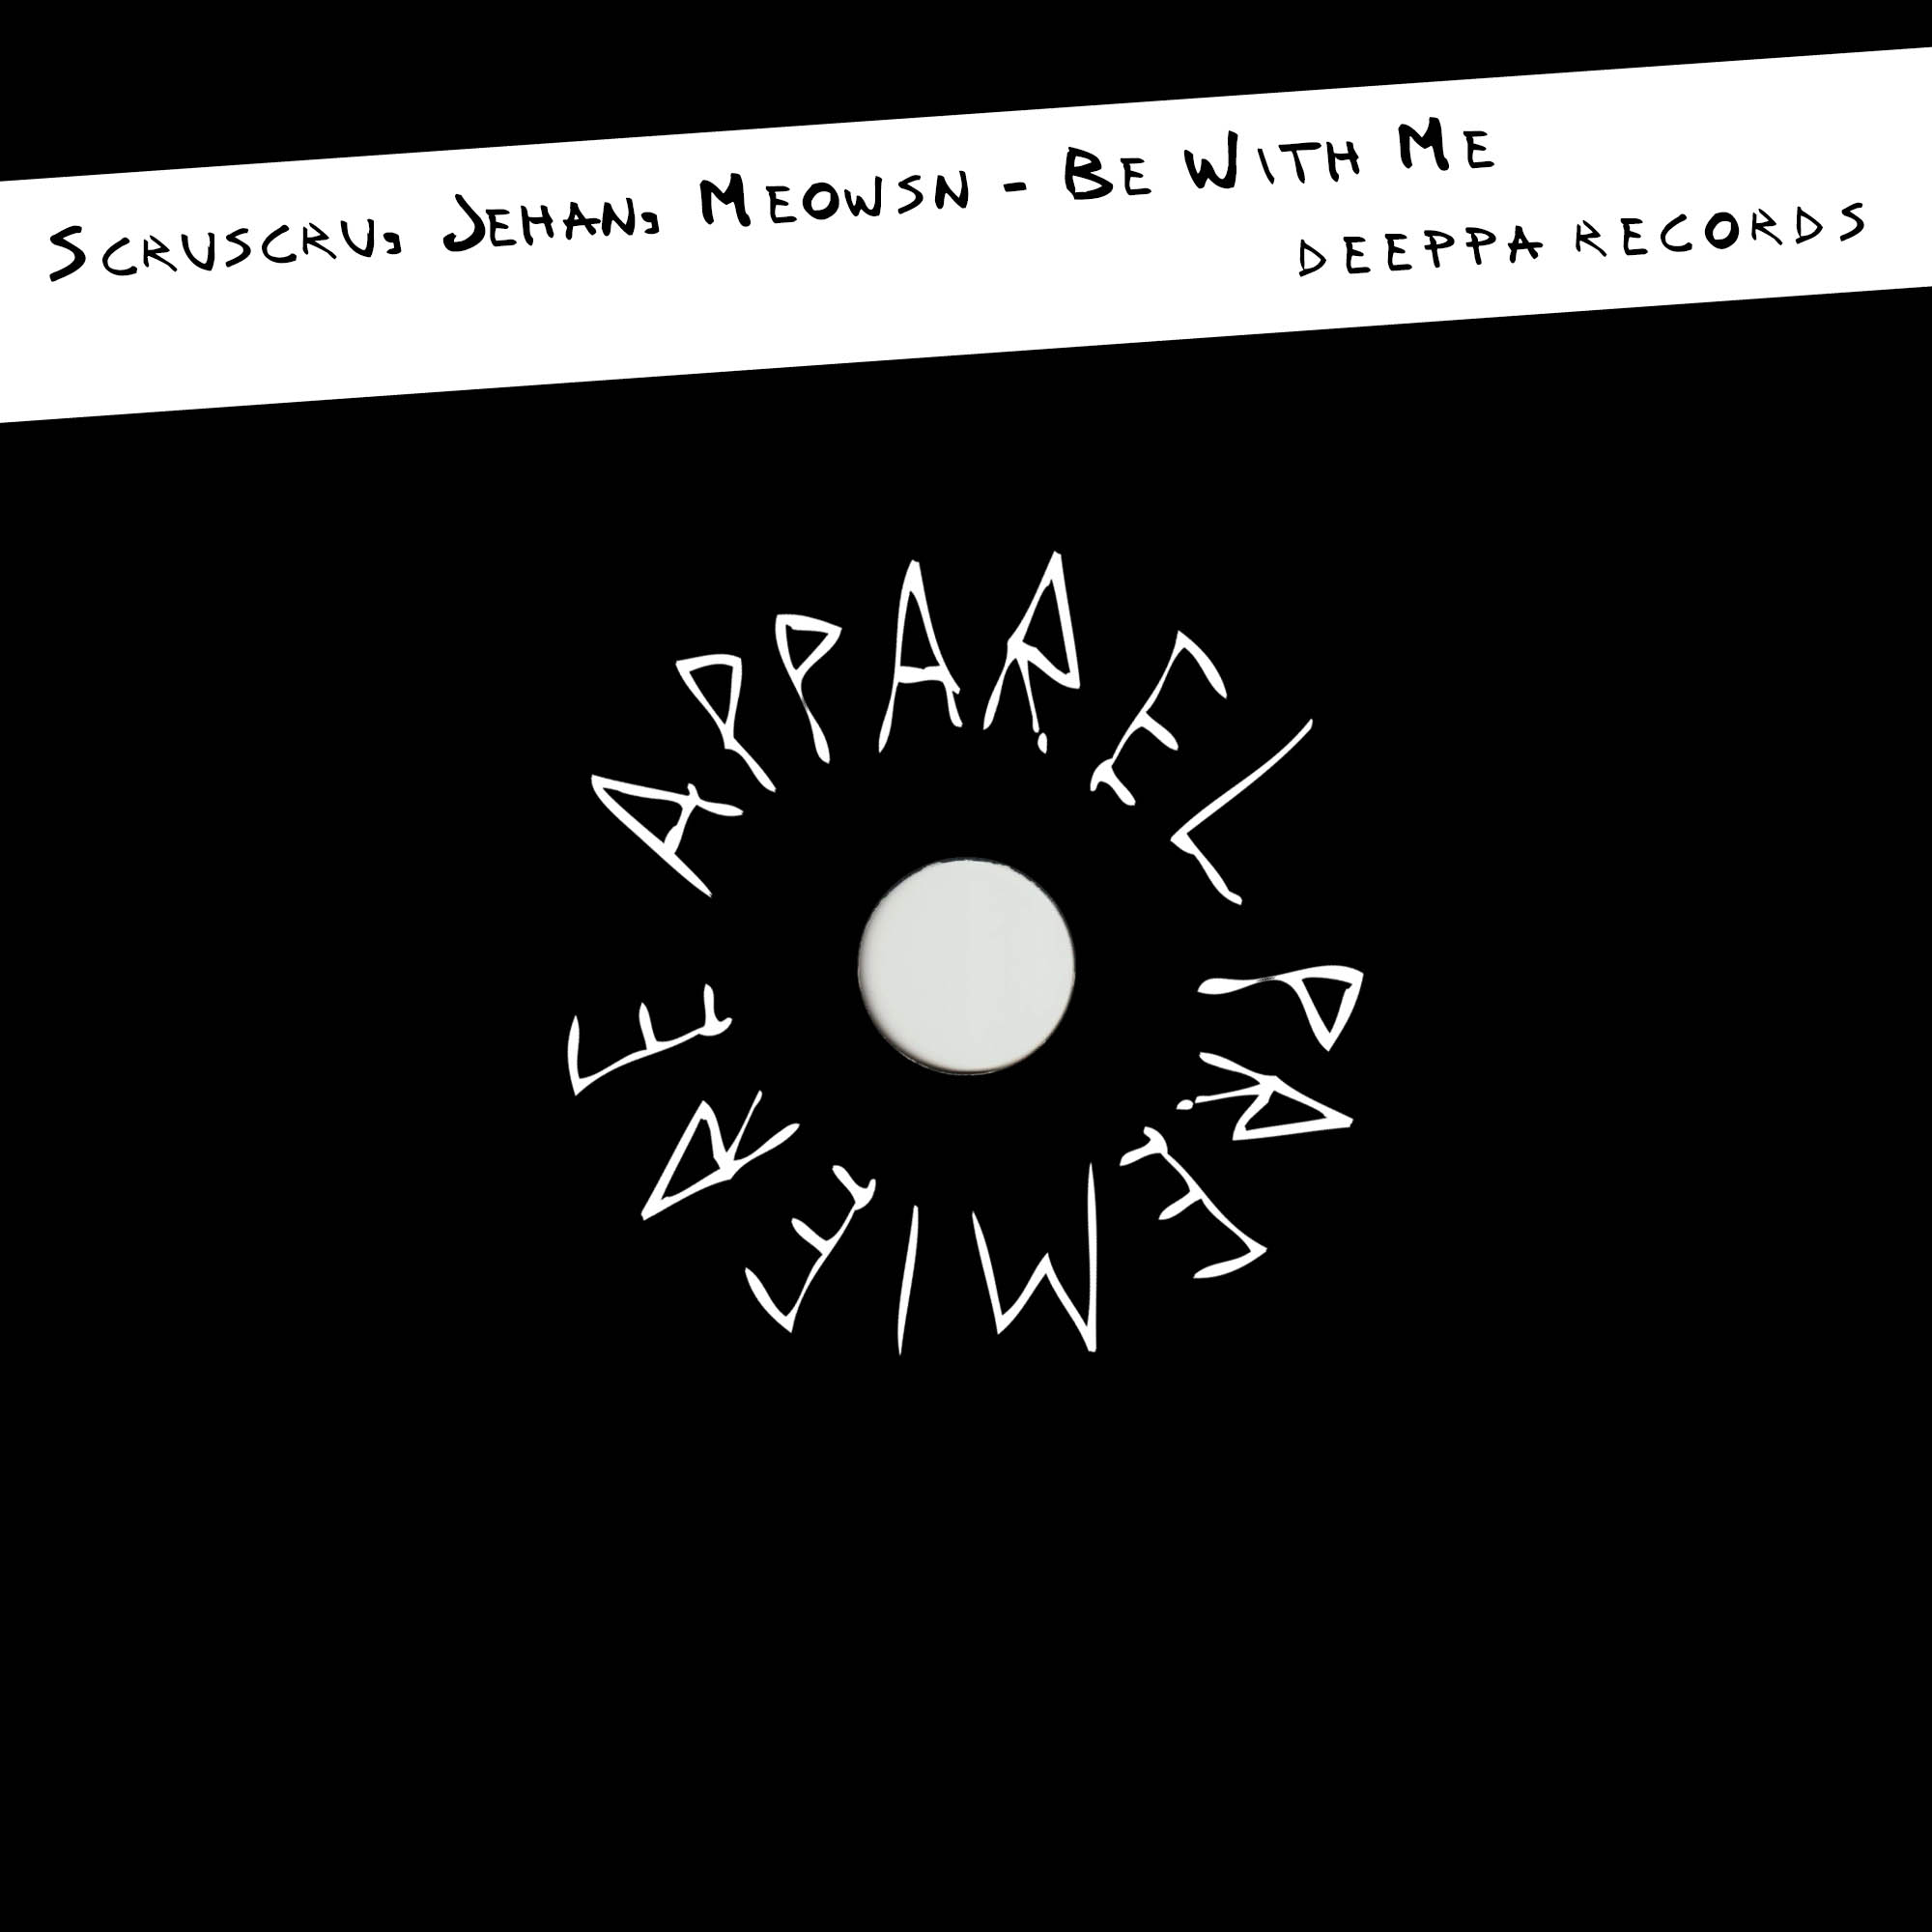 APPAREL PREMIERE Scruscru, Jehan, Meowsn – Be With Me [Deeppa Records]